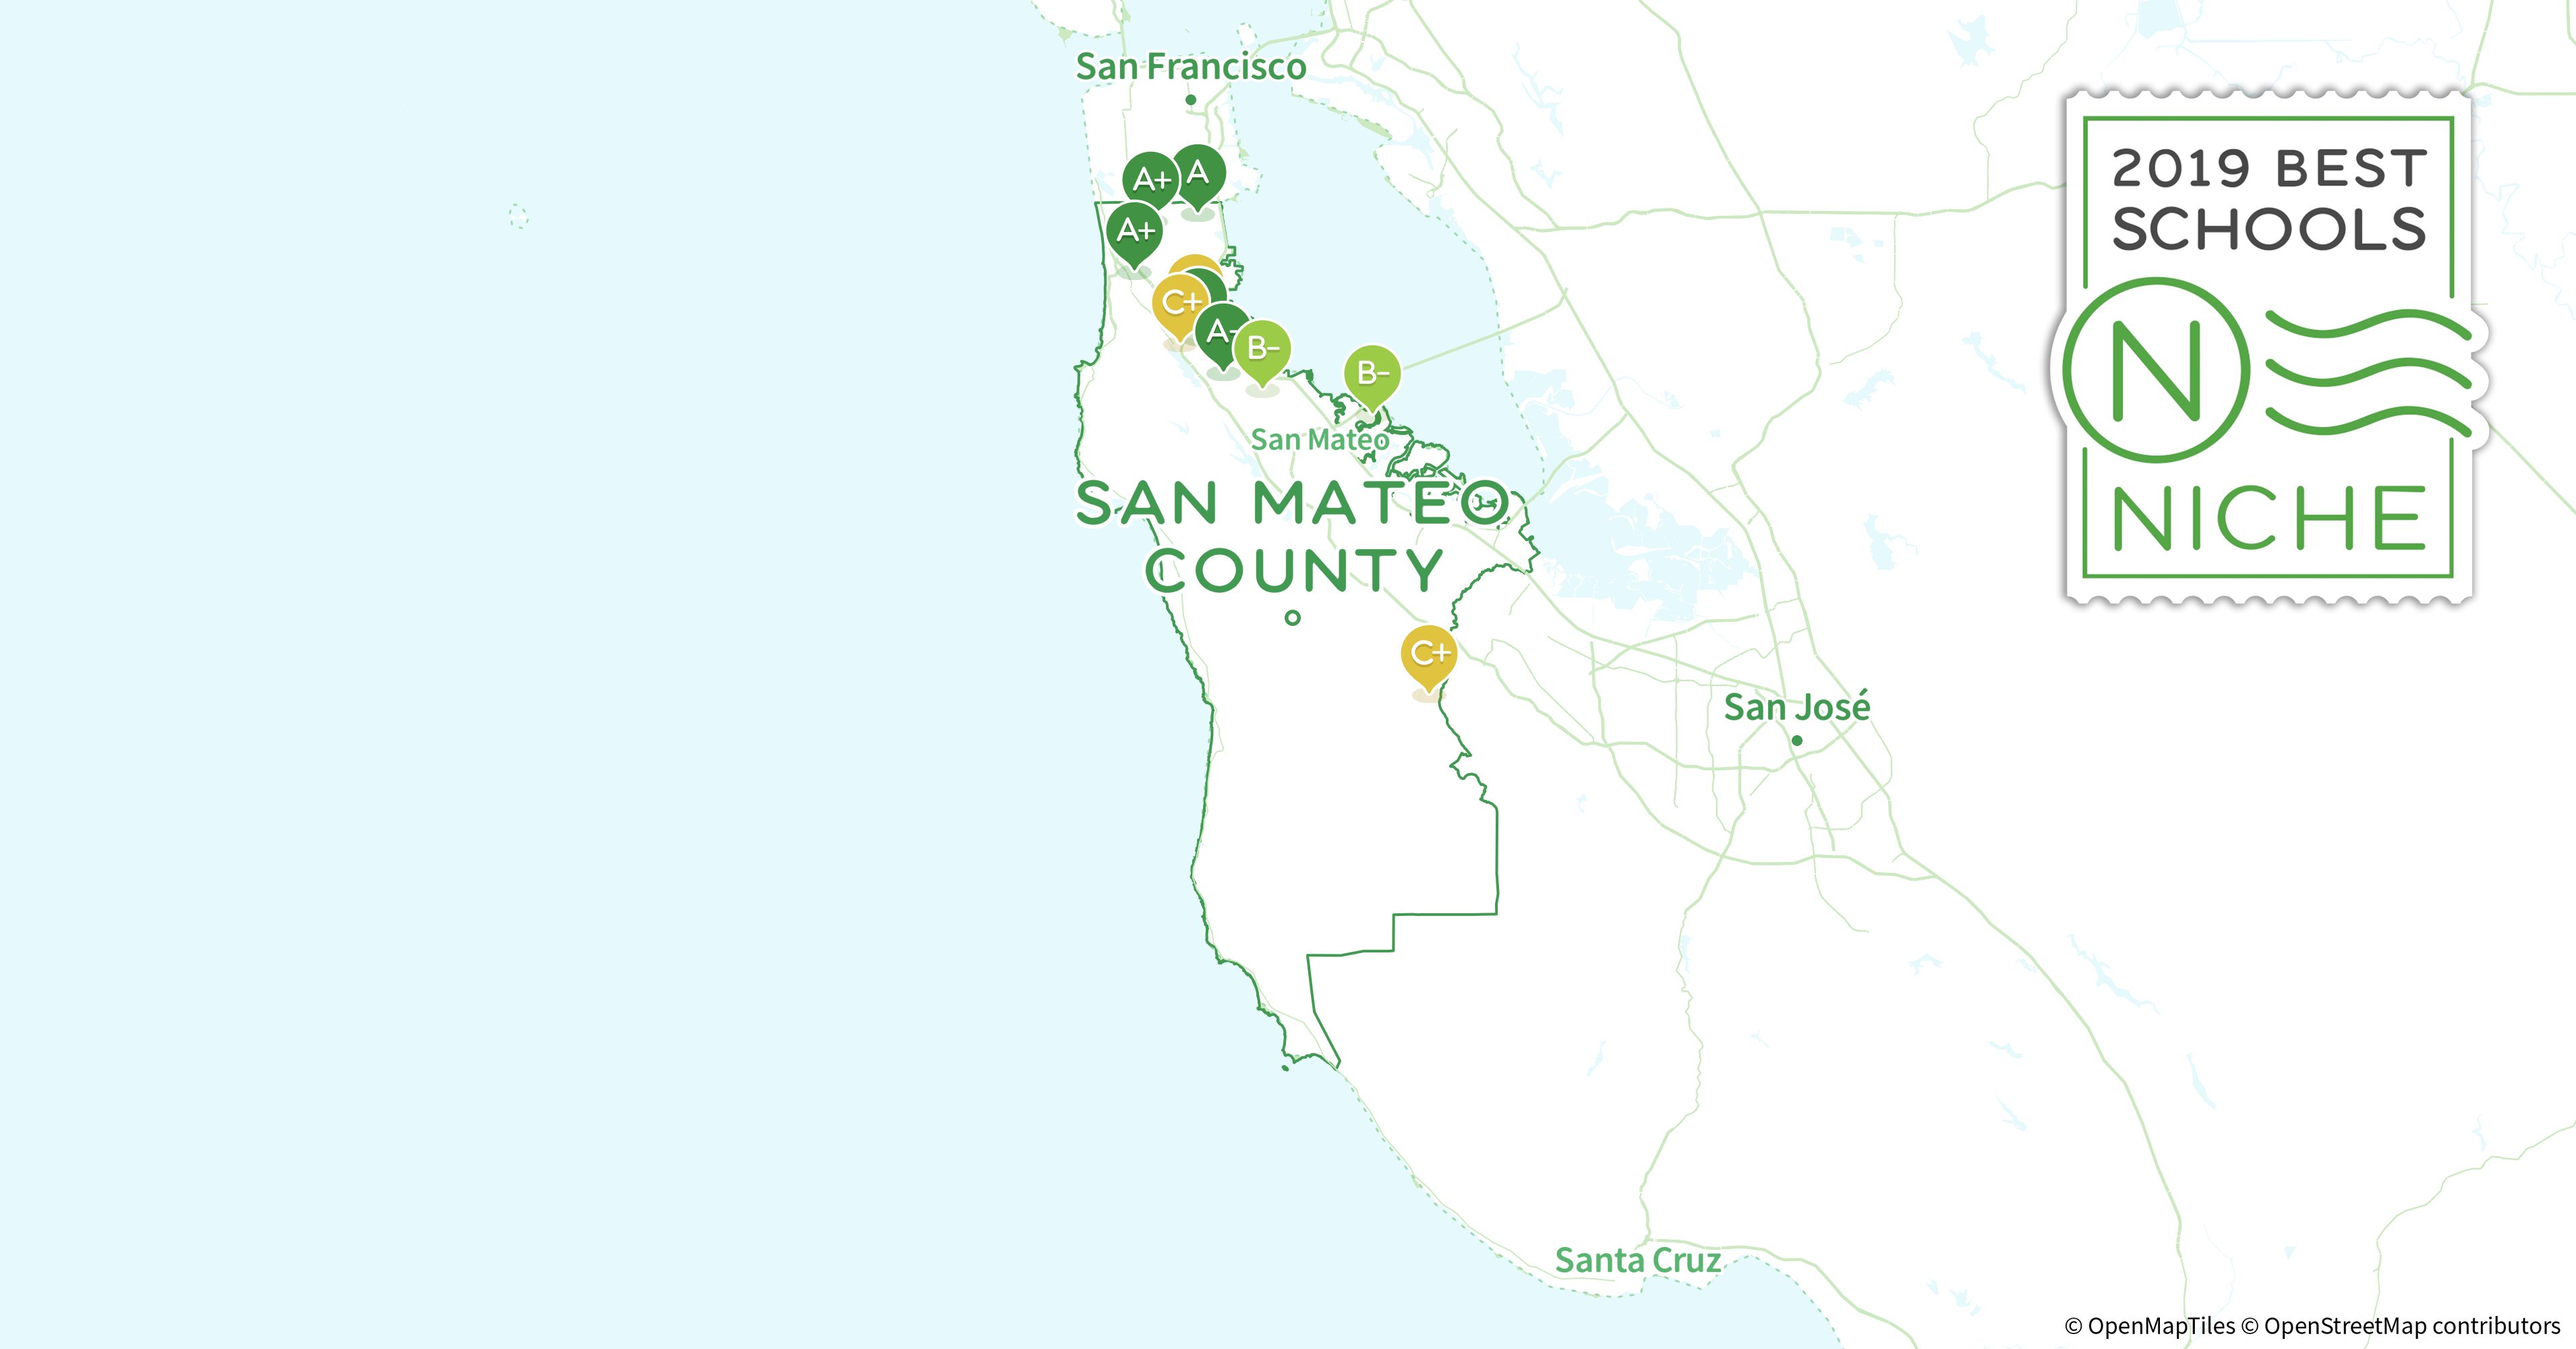 School Districts In San Mateo County, Ca - Niche - California School District Rankings Map